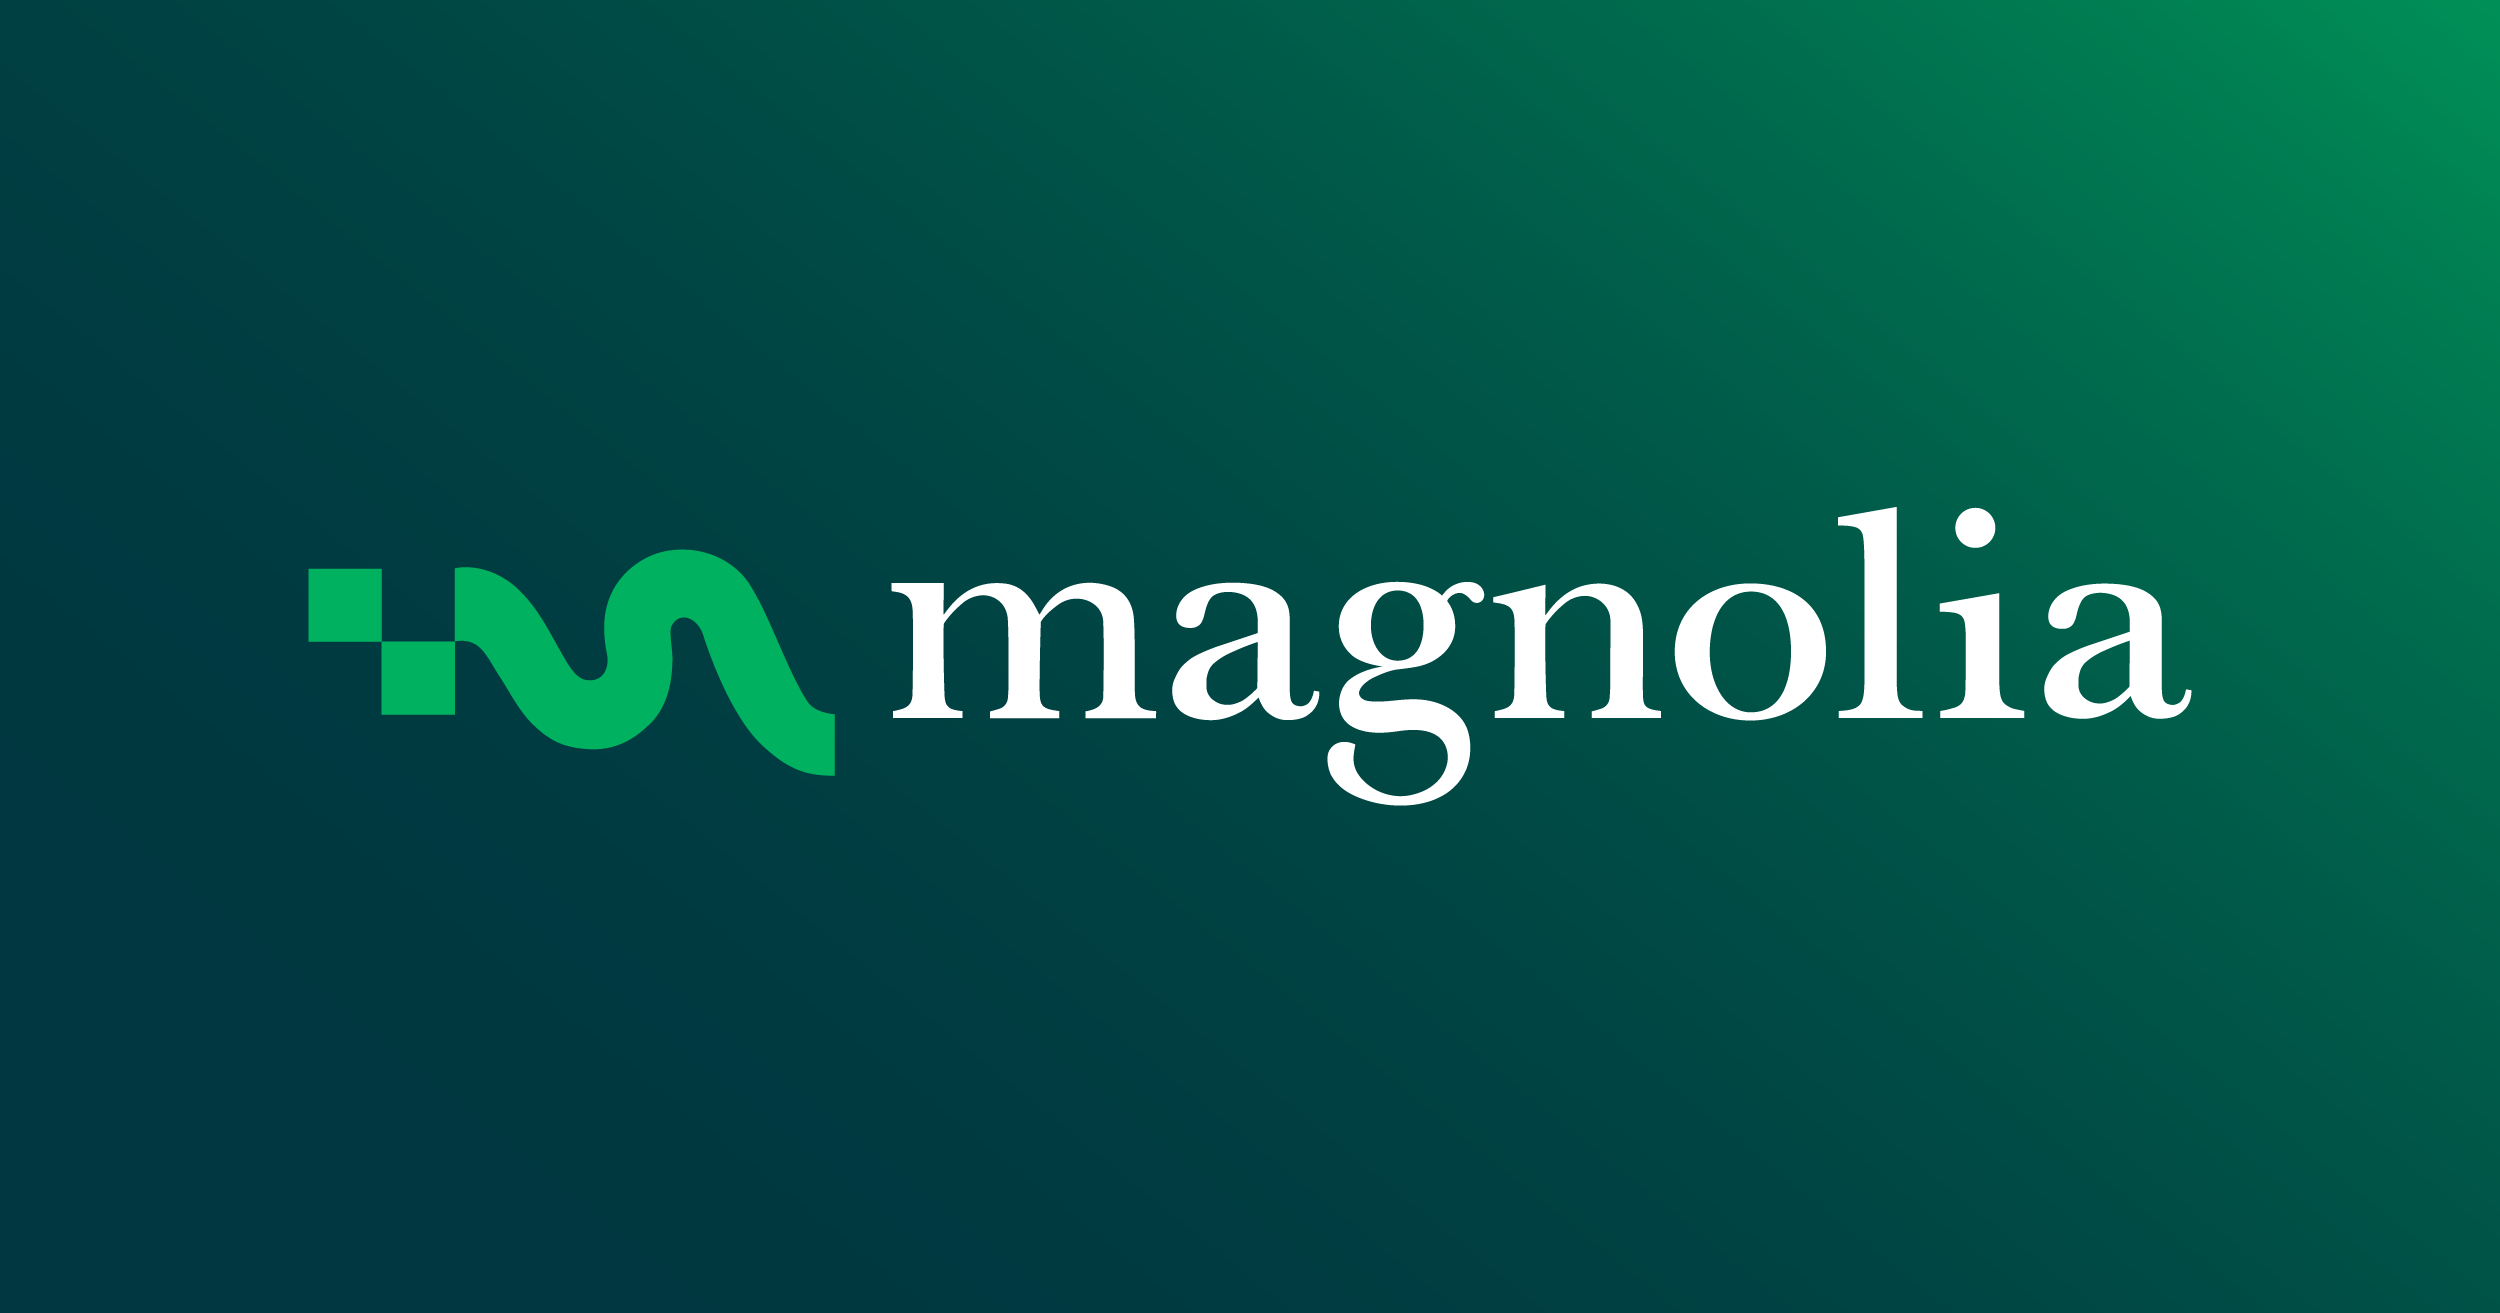 magnolia-meta-og-image